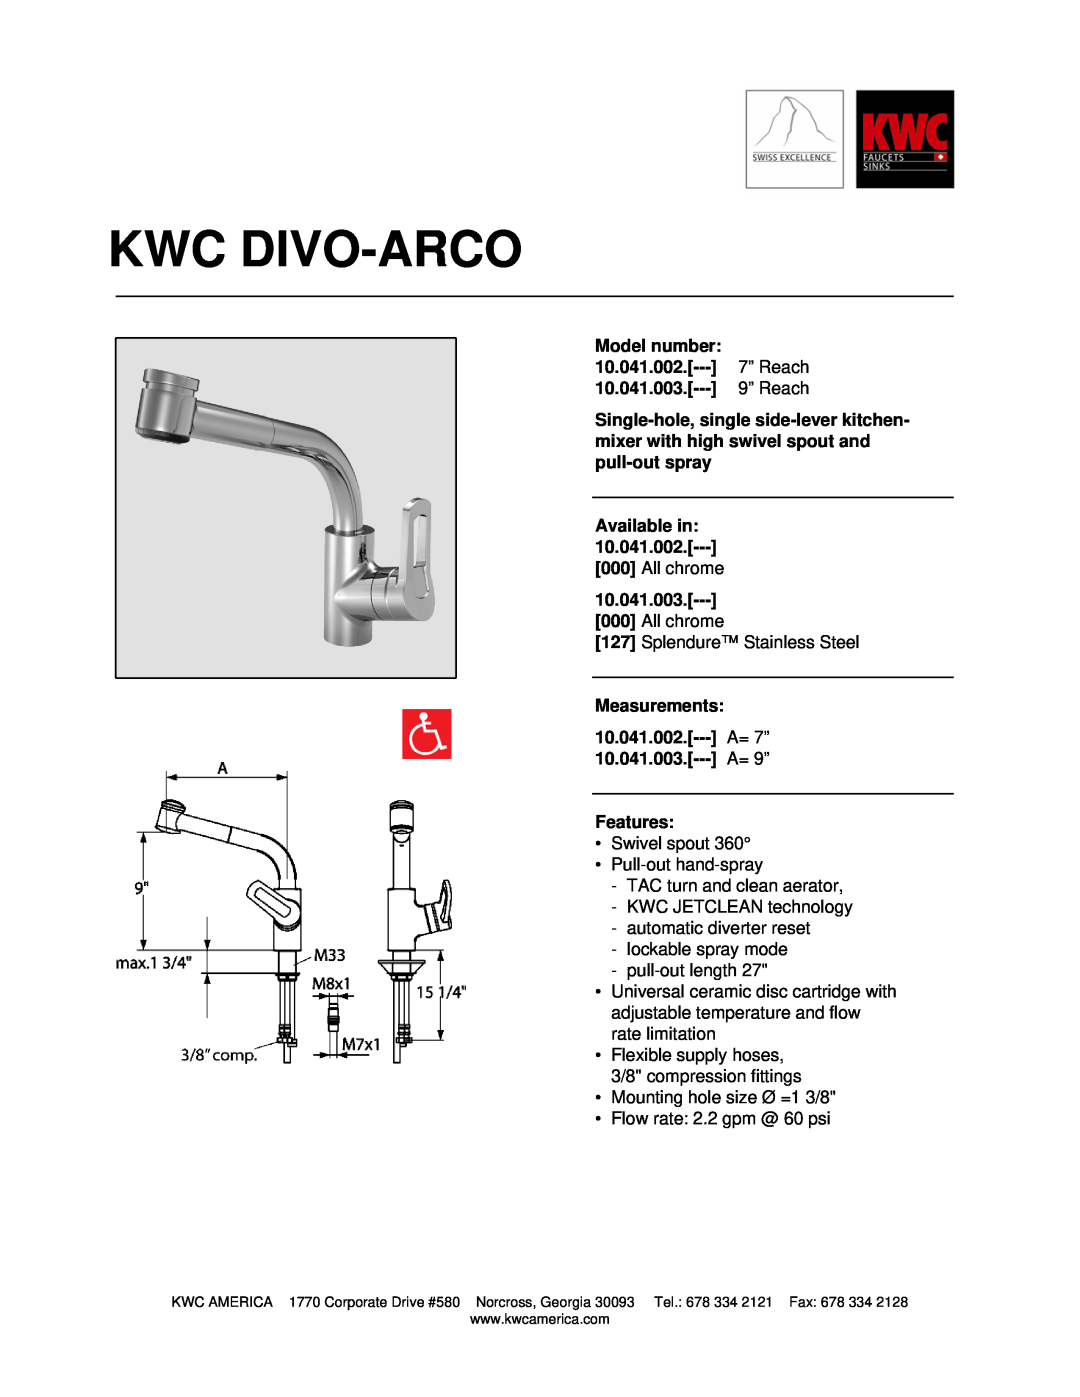 KWC 10.041.003, 10.041.002 manual Kwc Divo-Arco 